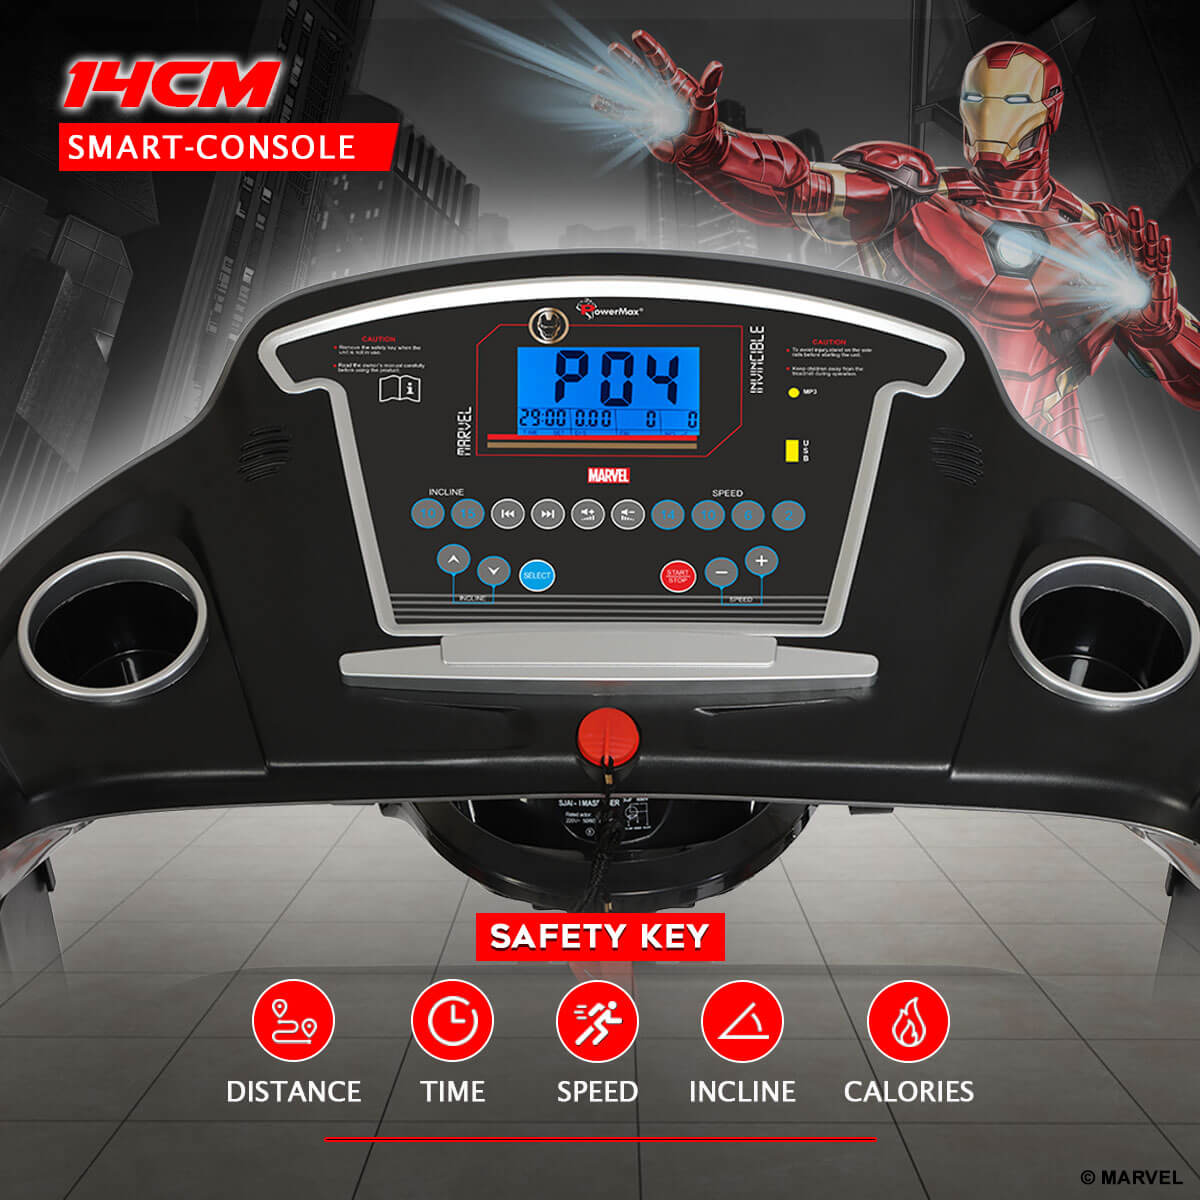 buy powermax x marvel mta-2300m multifunction treadmill with semi-auto lubrication